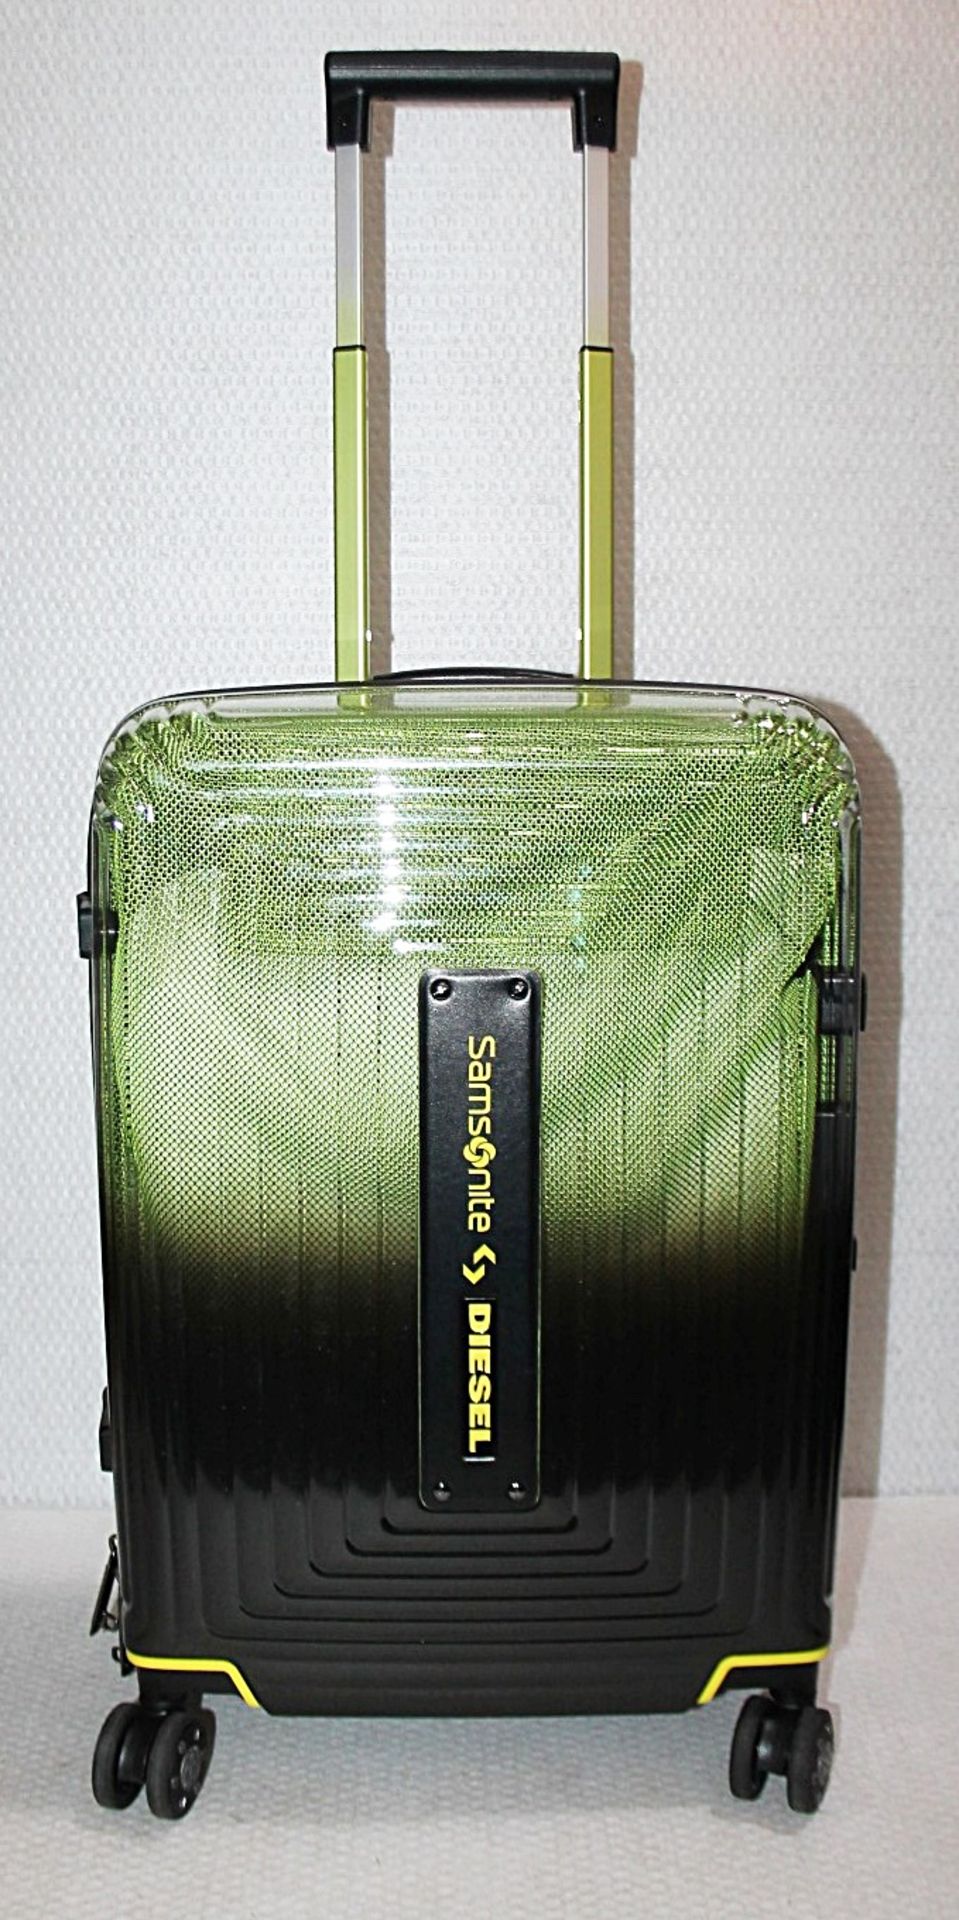 1 x SAMSONITE / DIESEL 'Neopulse' Polycarbonate Spinner Suitcase (55cm) - Ex-Display With Tags - - Image 7 of 17